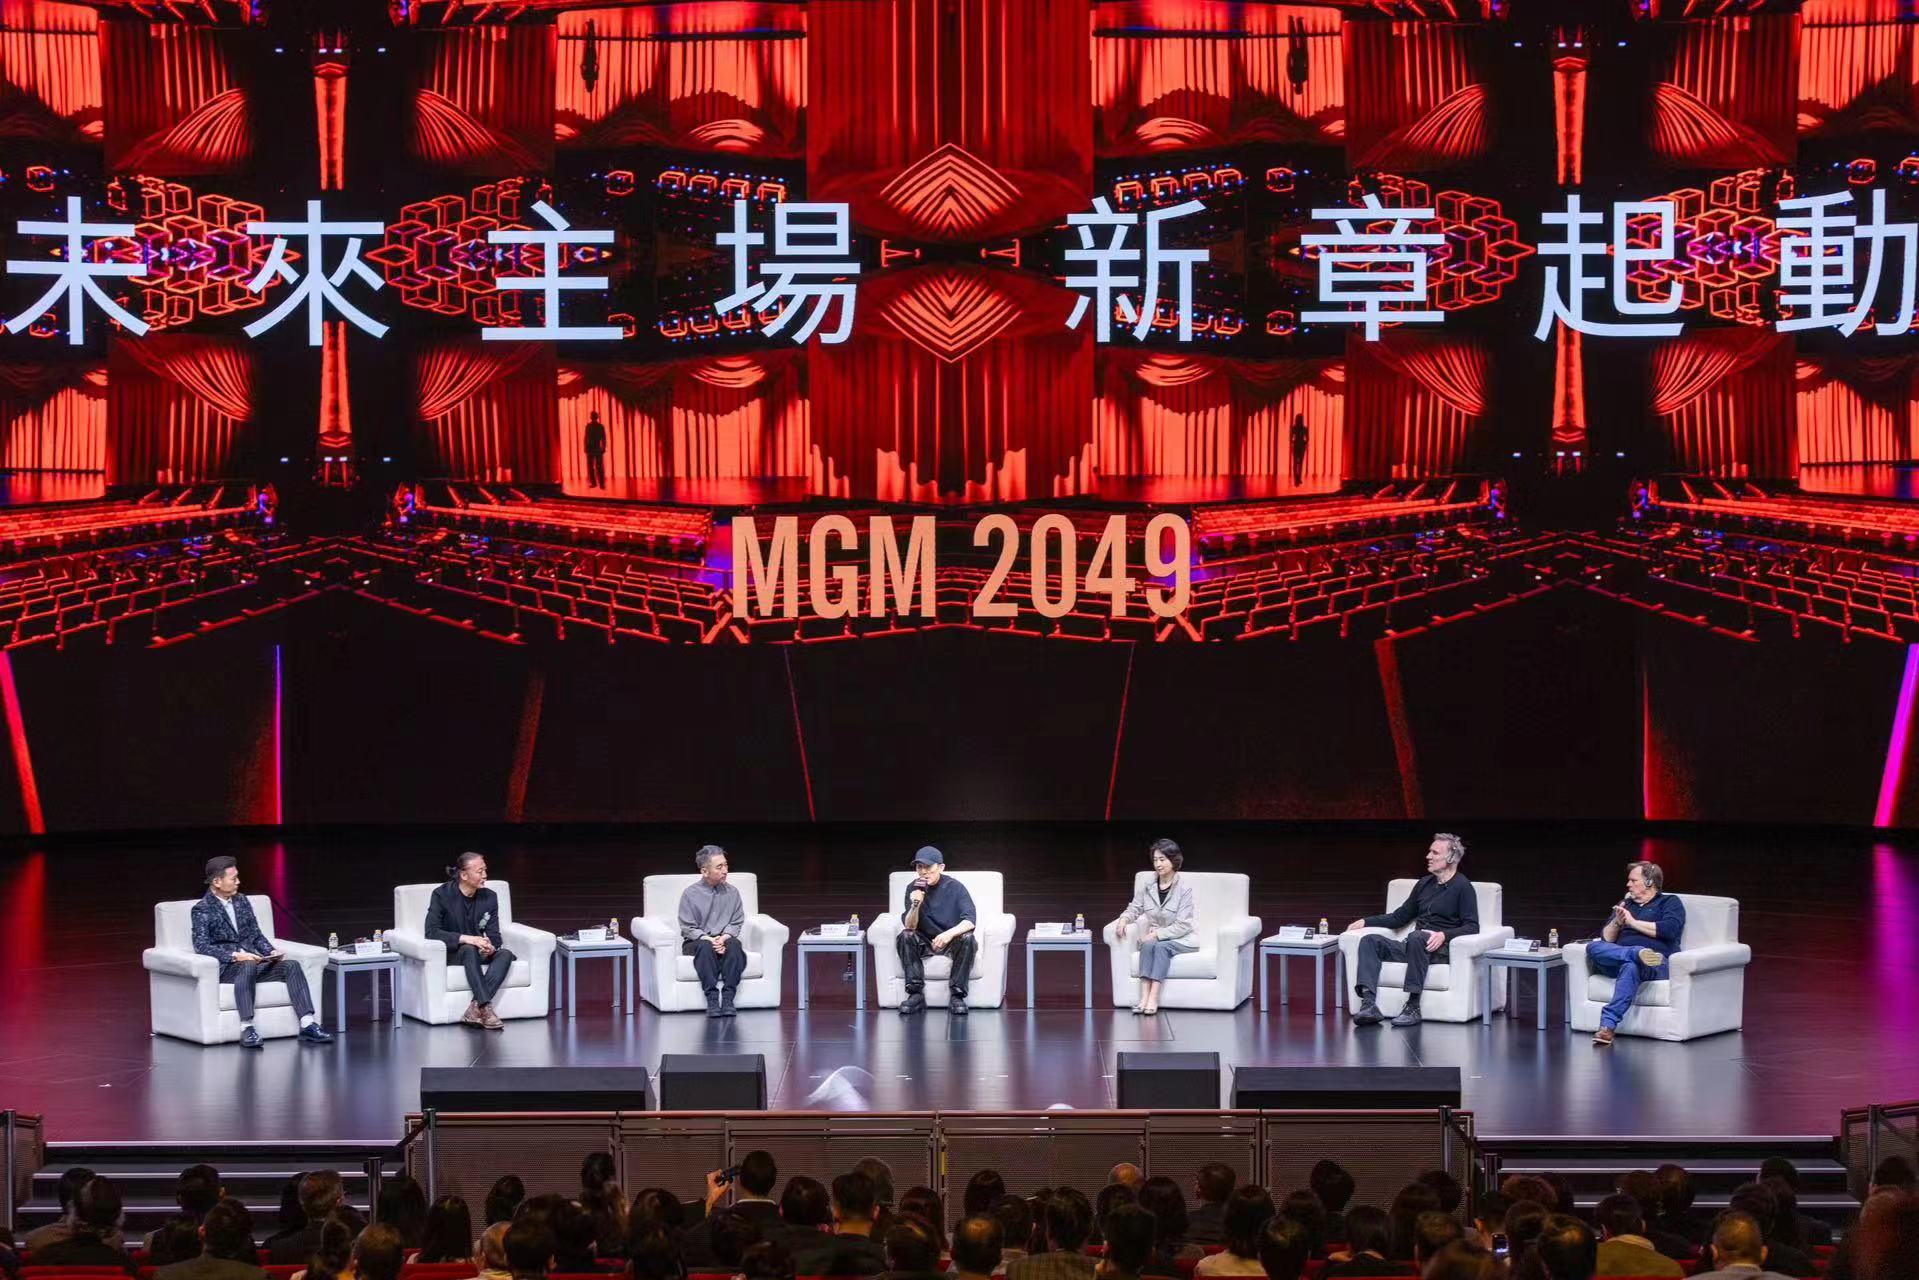 《MGM 2049》之专题交流座谈会暨全球招募启动仪式